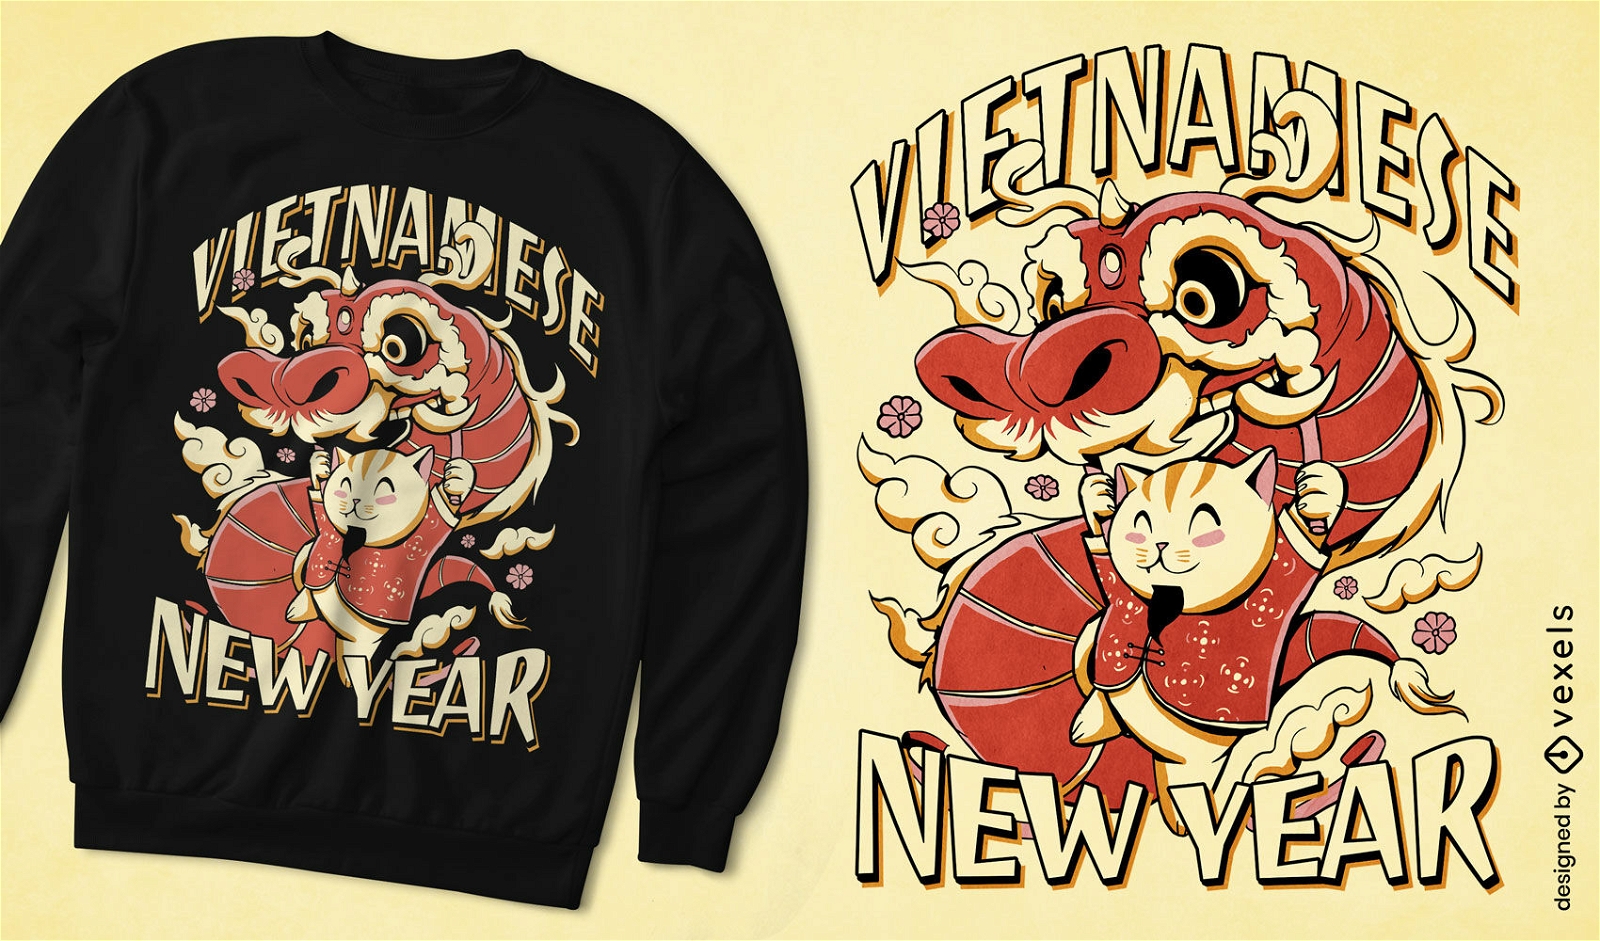 Vietnamese new year dragon t-shirt design